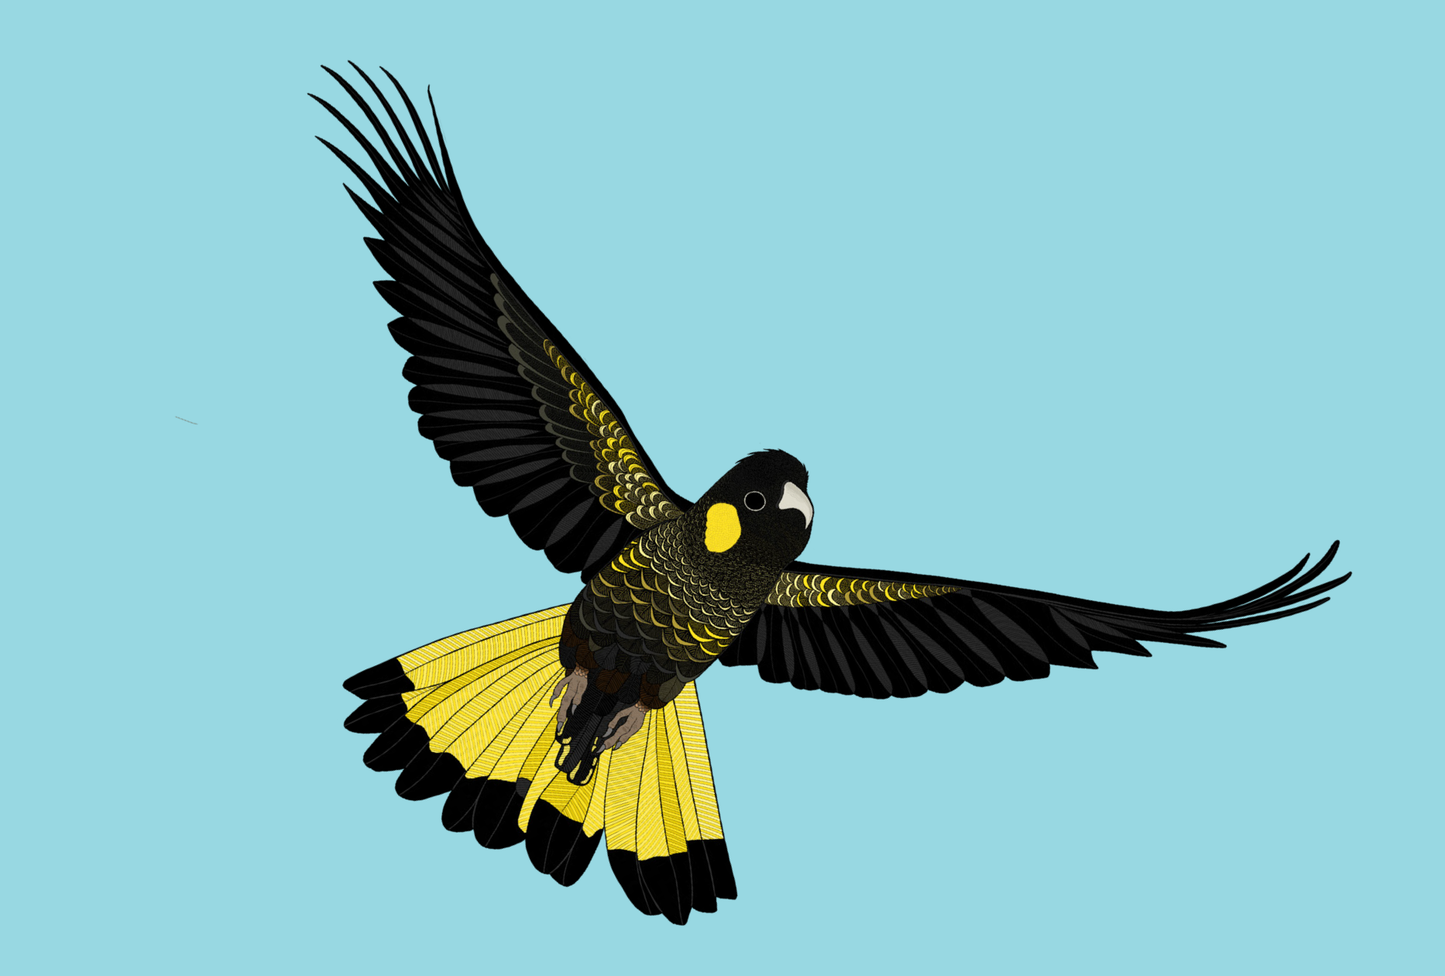 Australian Animal Card - Yellow-tailed Black Cockatoo